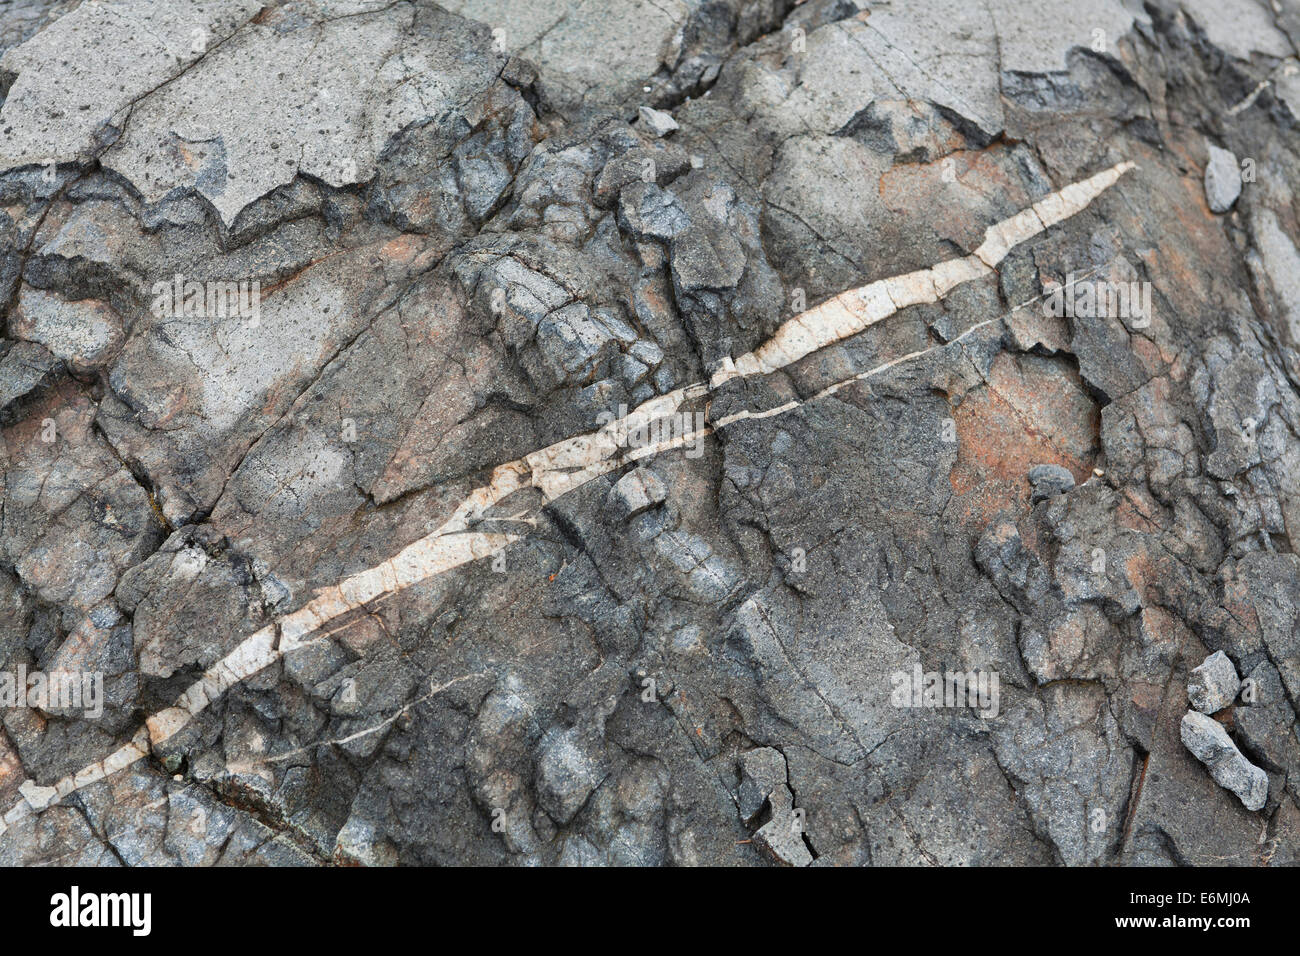 Veine de quartz dans le granite rock - California USA Banque D'Images